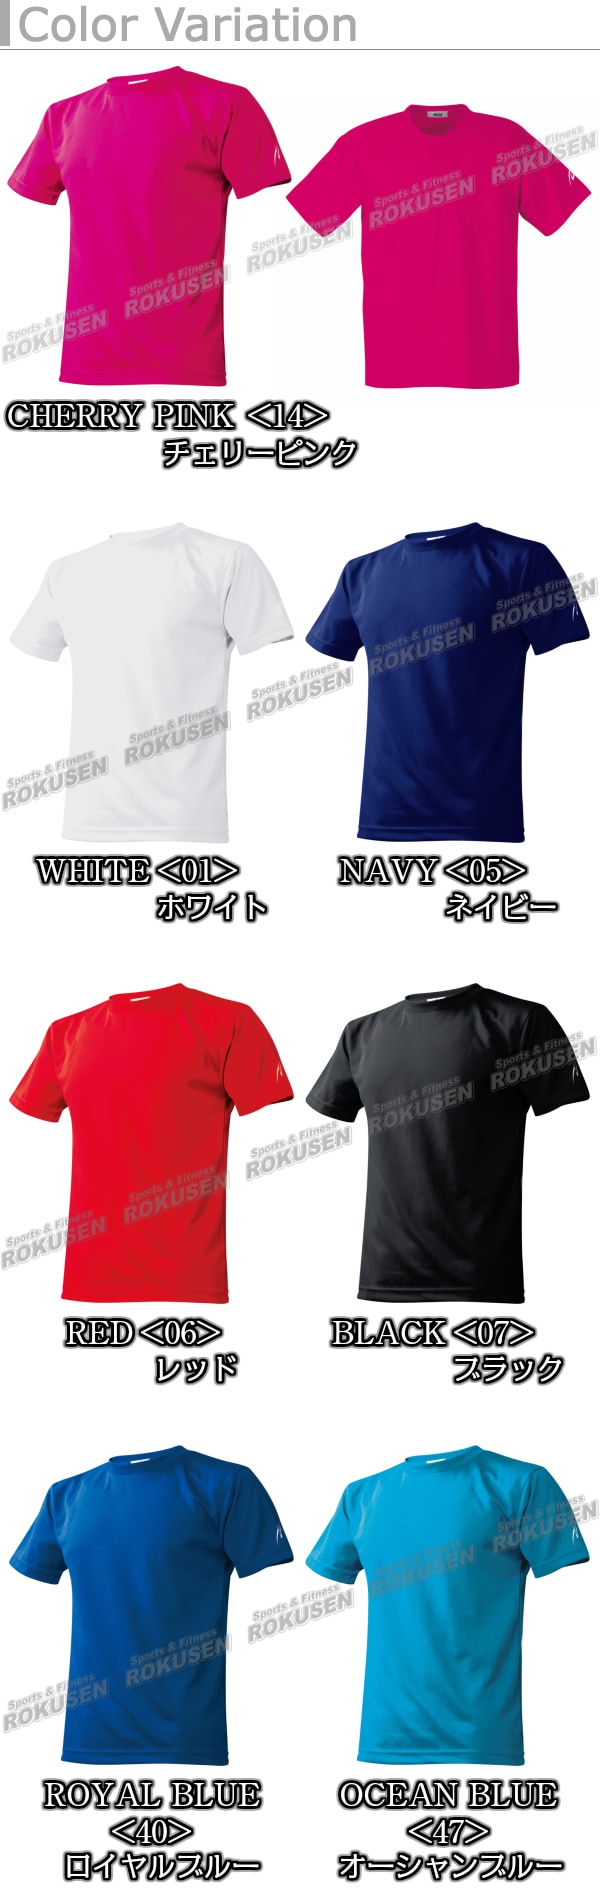 NISHI ニシ・スポーツ ベーシックシャツ マイクロアルファTシャツ N63-510 [ネーム加工対応] | メーカー・ブランド,NISHI